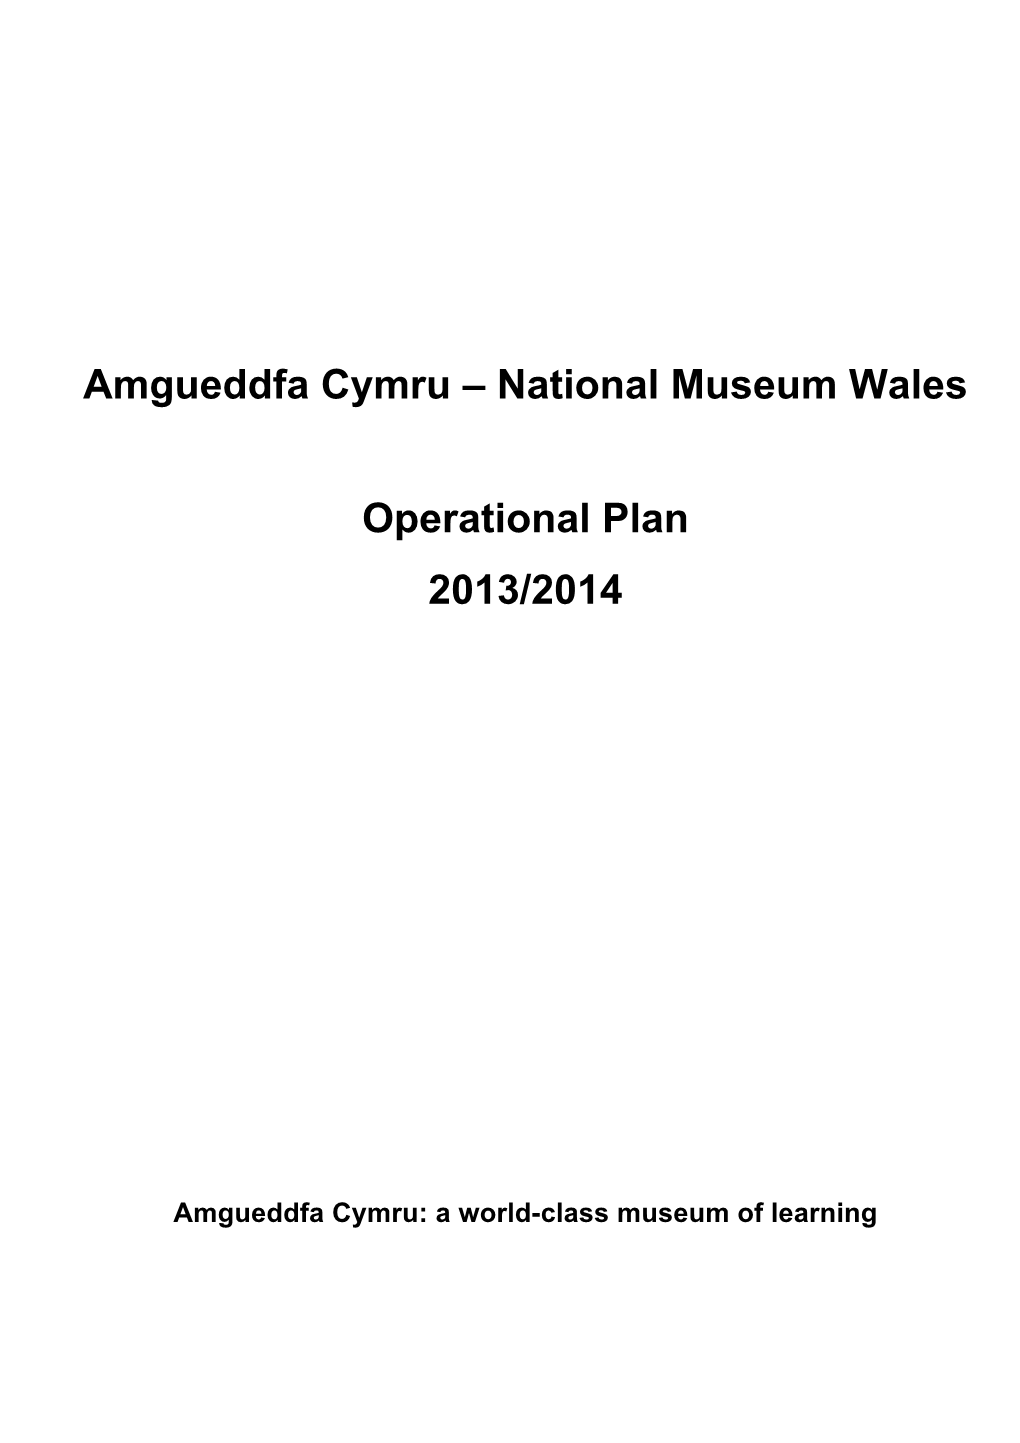 Amgueddfa Cymru – National Museum Wales Operational Plan